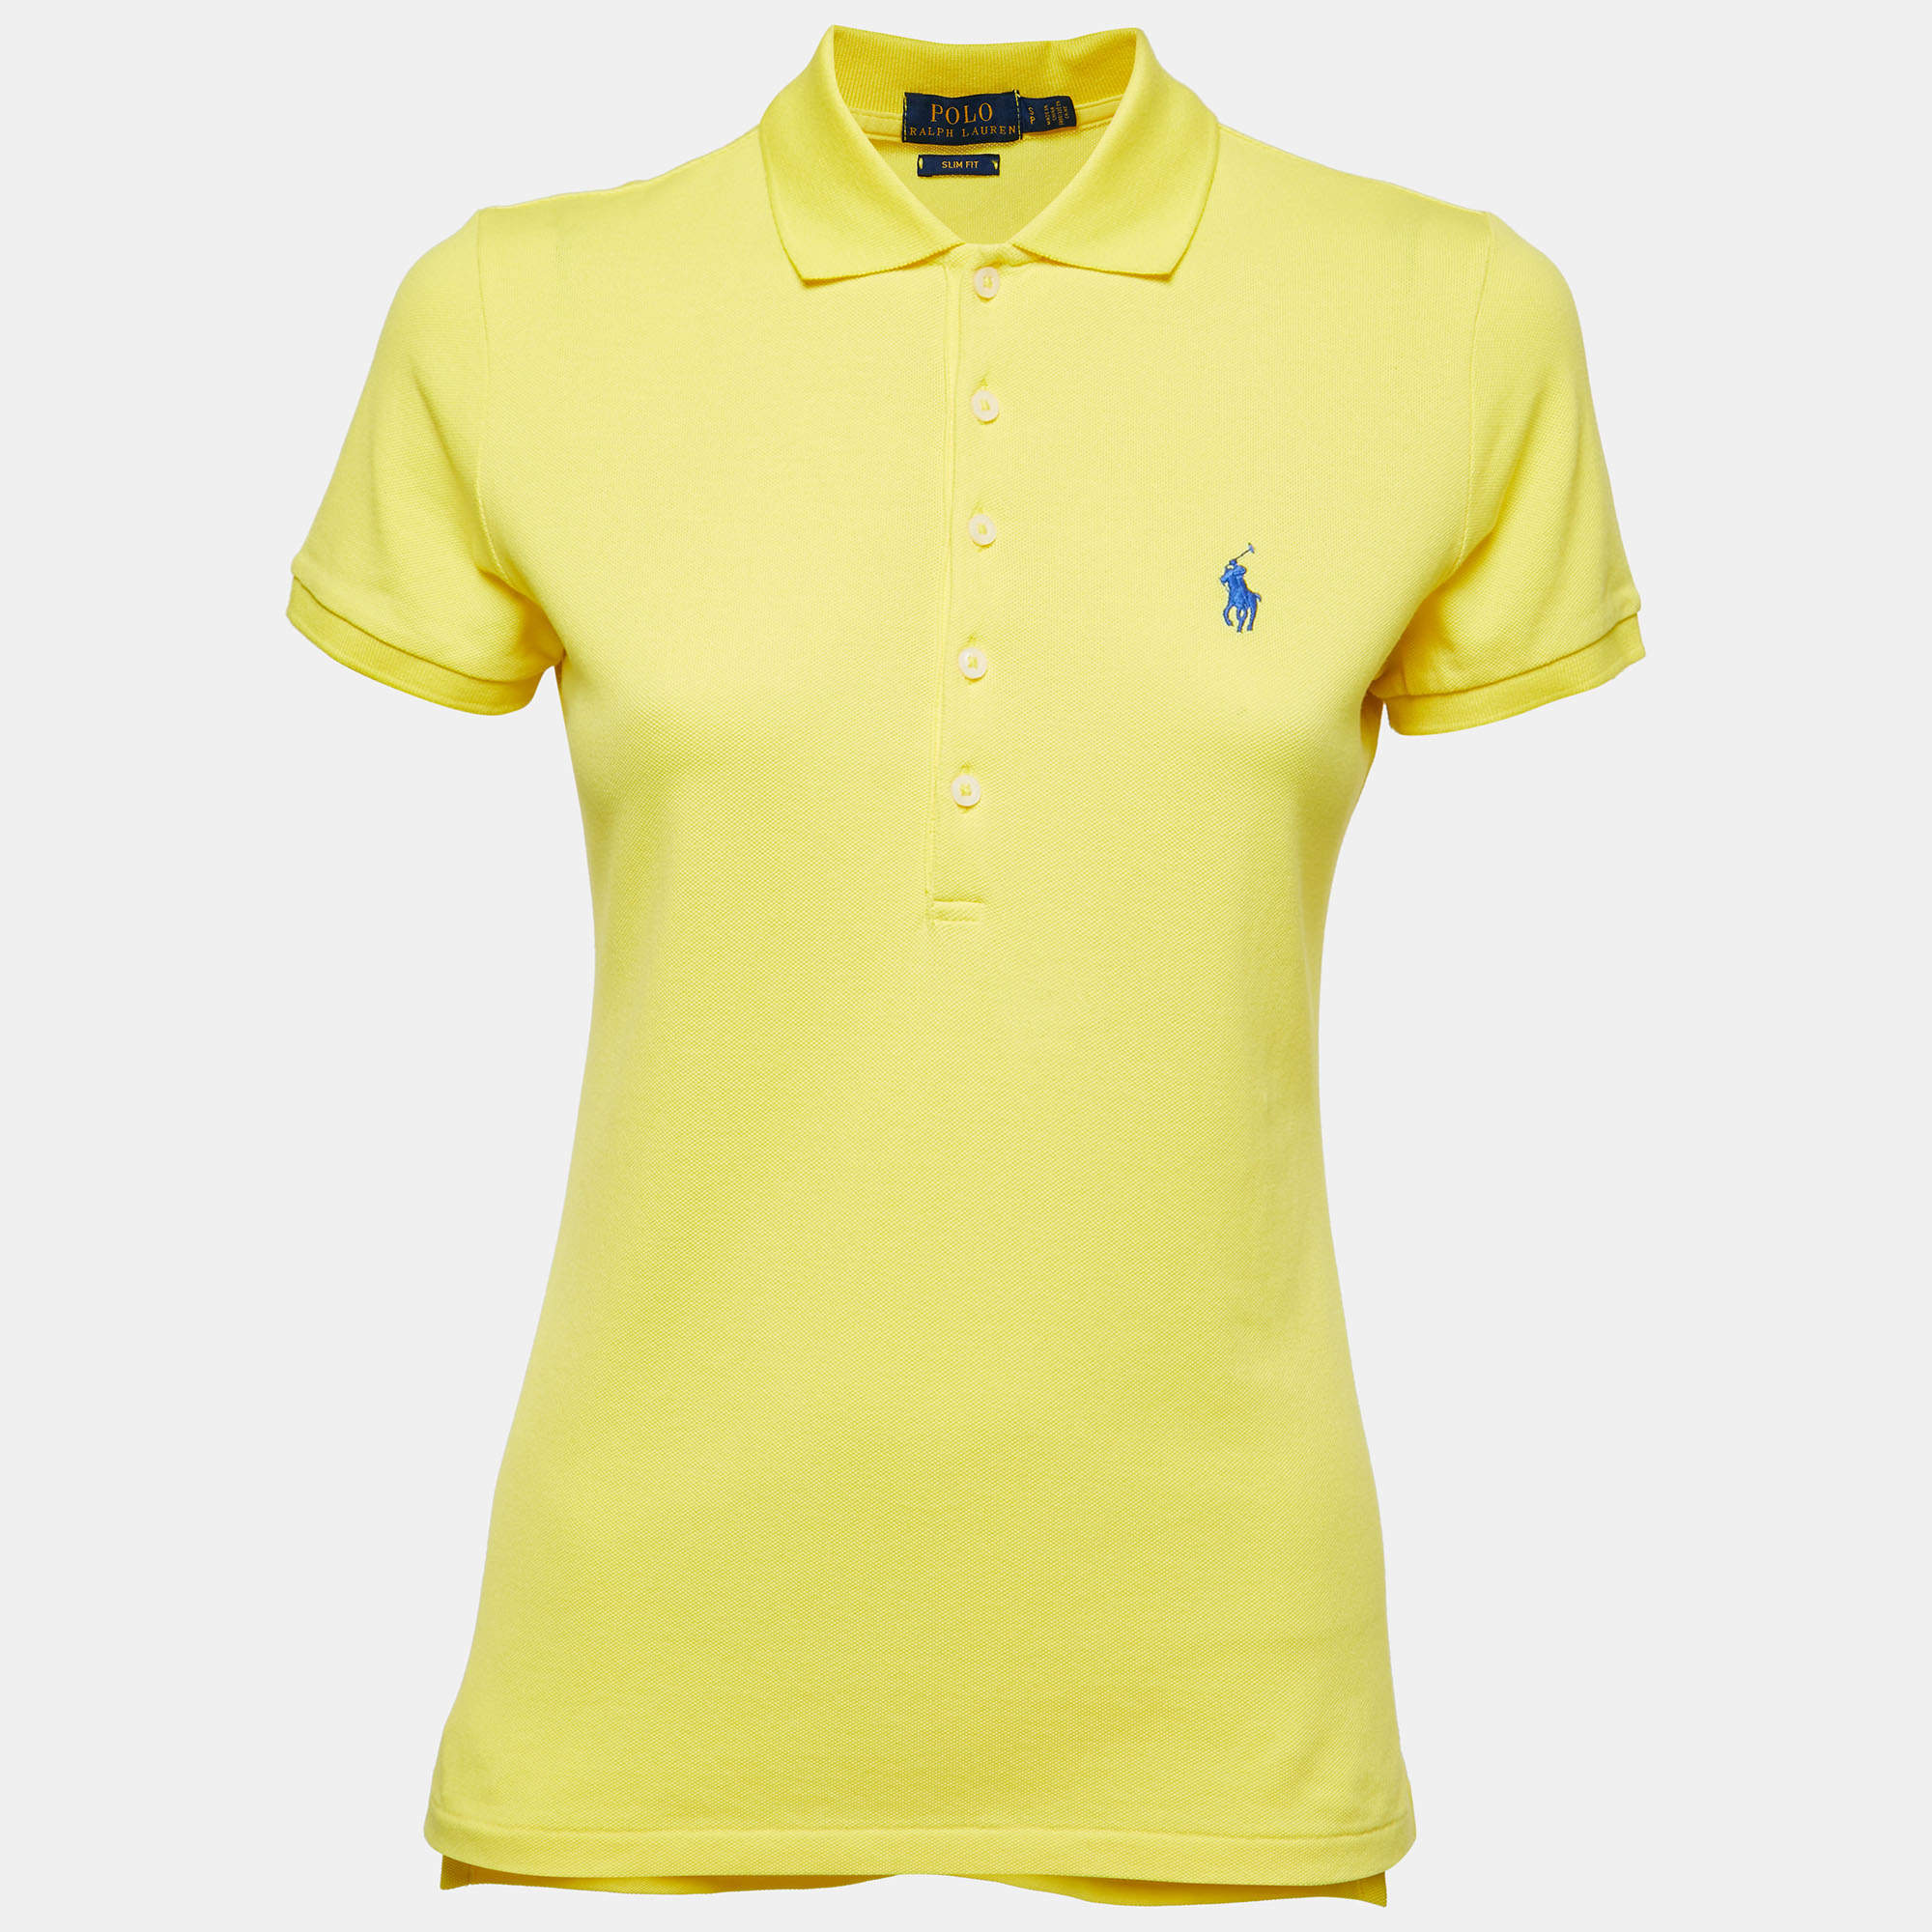 Polo Ralph Lauren Yellow Cotton Slim Fit Polo T-Shirt S Polo Ralph Lauren